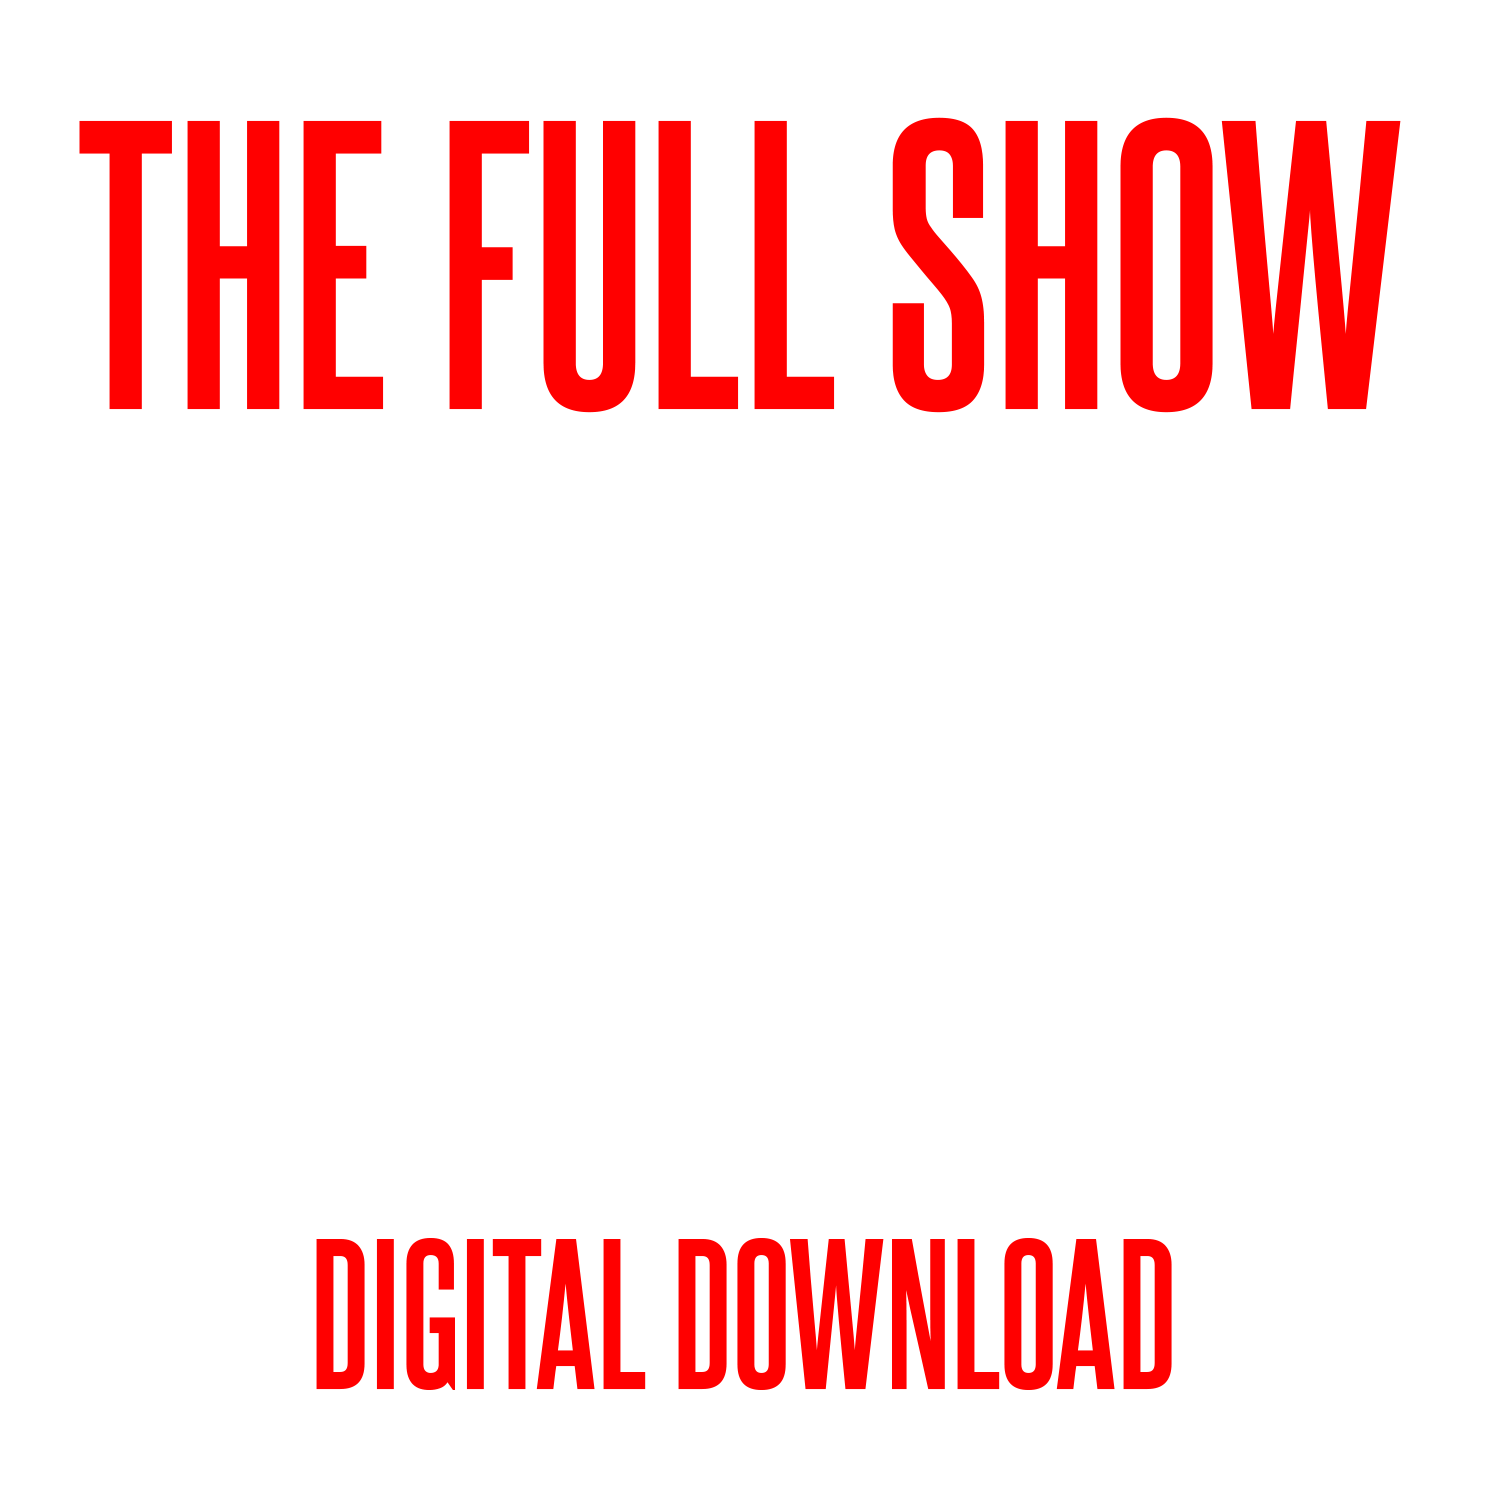 20th Anniversary Full Show - January 20th 2017 - Ft. Lauderdale, FL - Digital Download